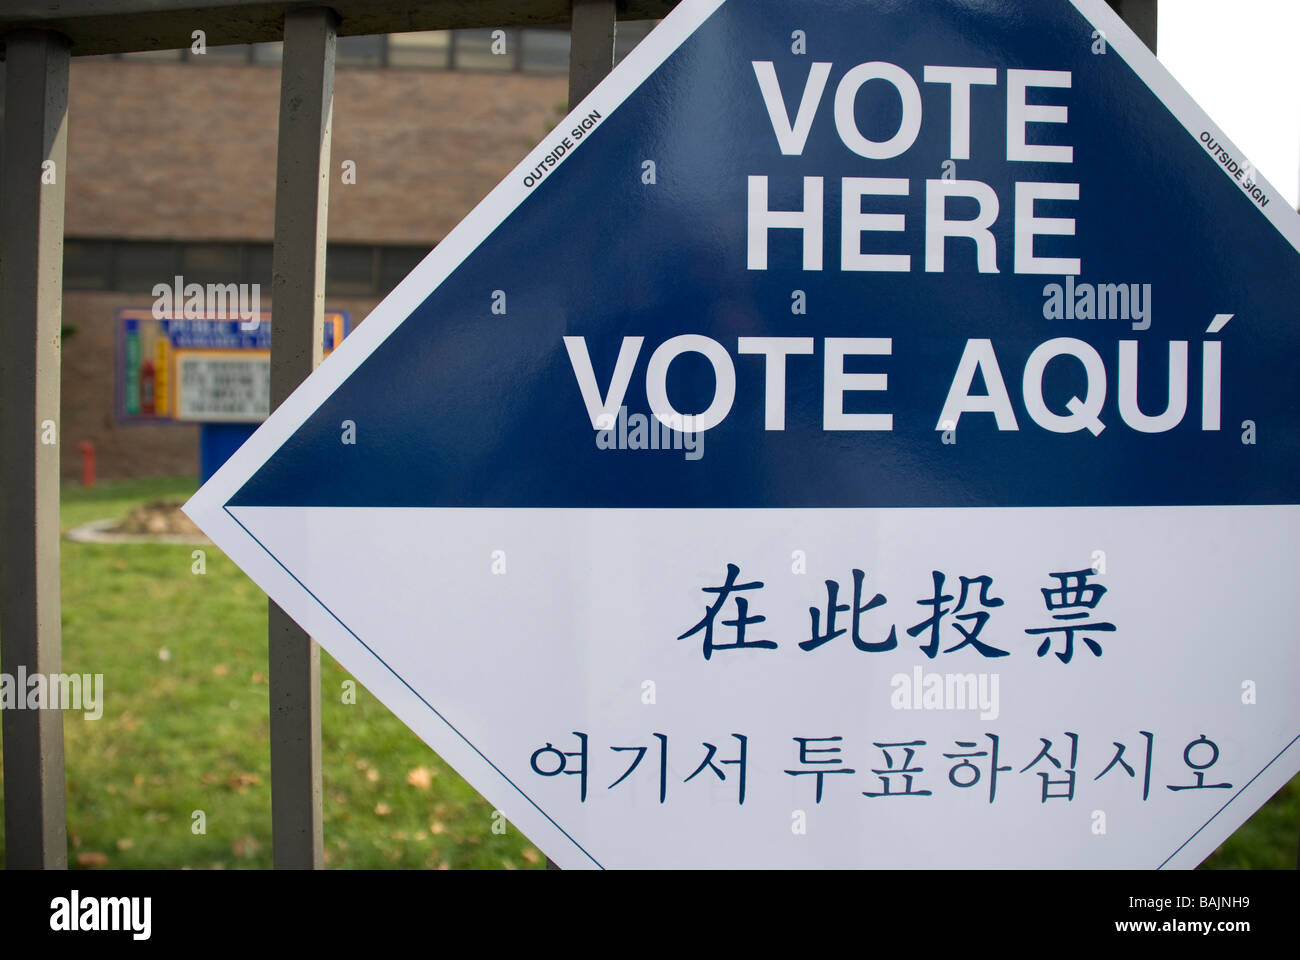 vote poll spanish korean chinese english language multi foreign diversity horizontal patriotic responsibility duty democracy Stock Photo